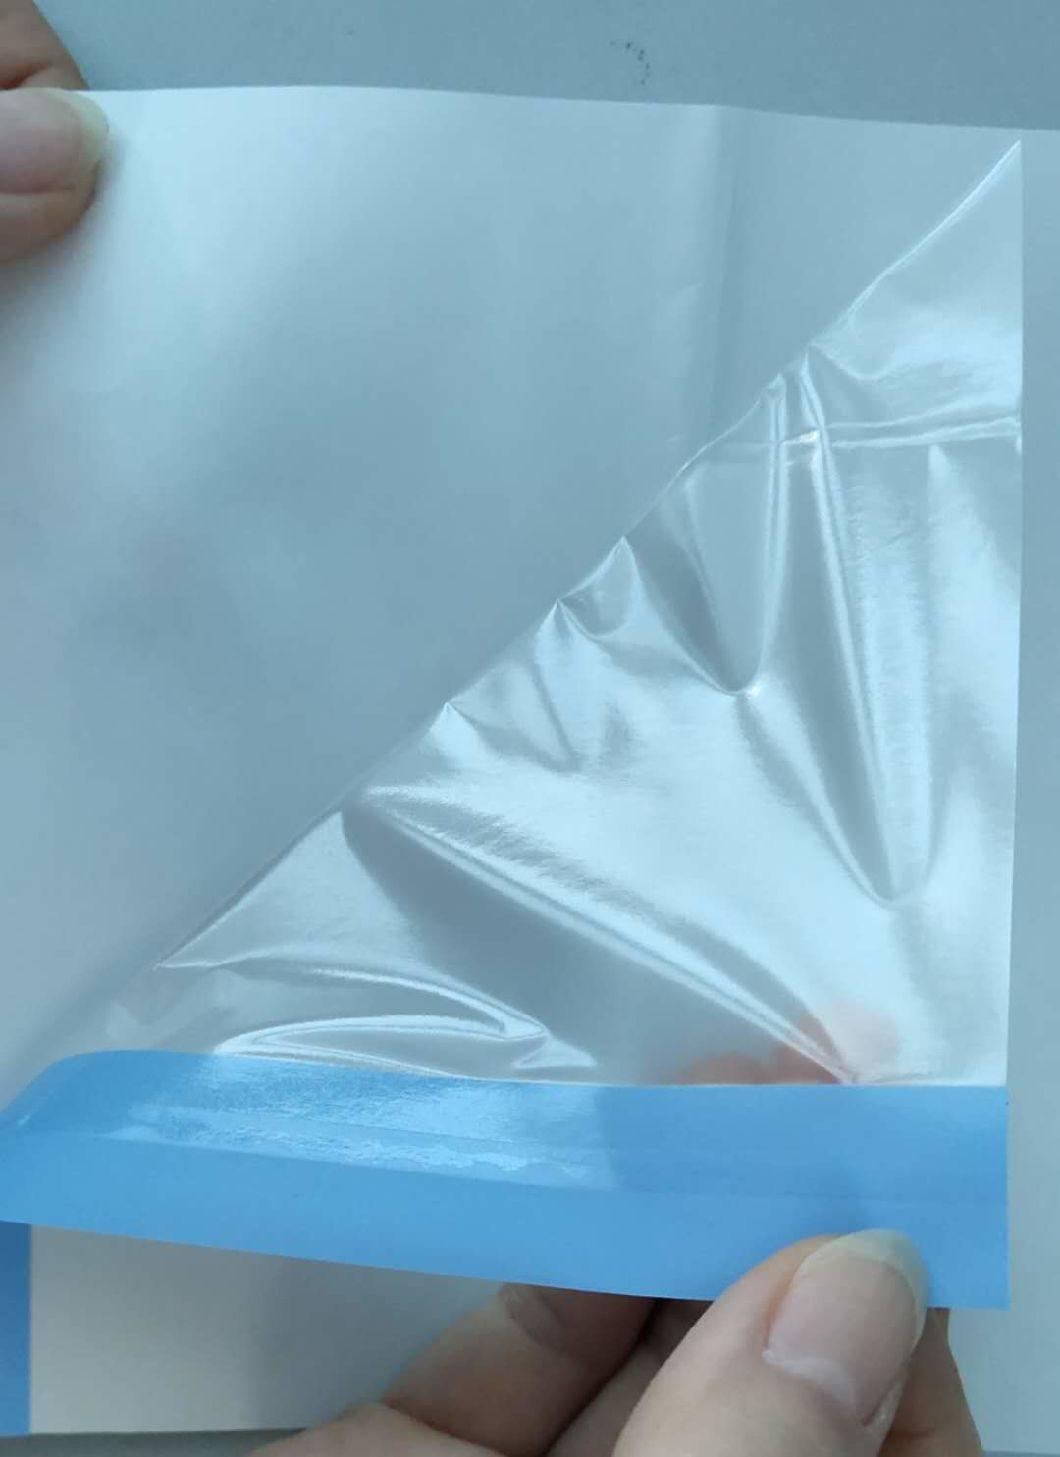 Medical Disposable Adhesive Incise Drape Transparent PU Surgical Film